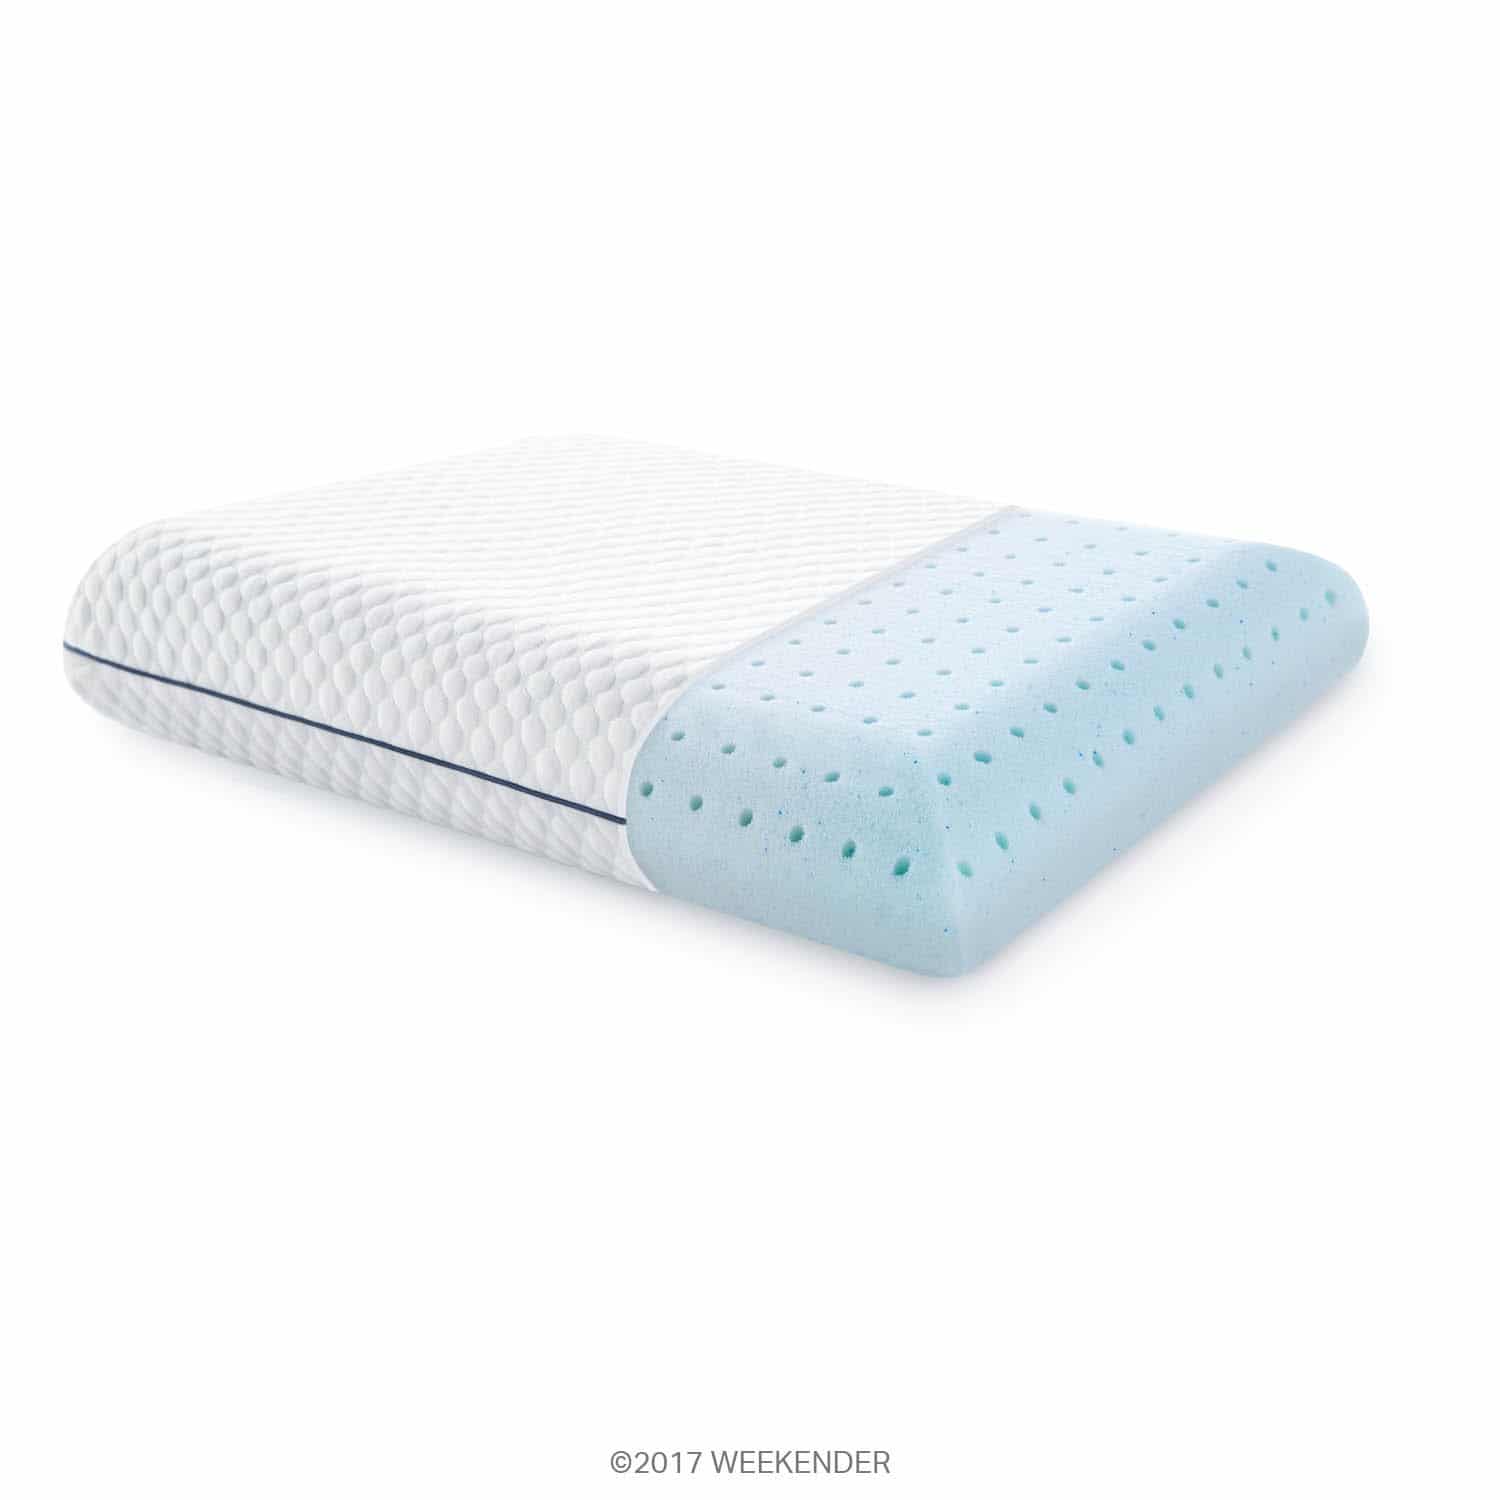 WEEKENDER Ventilated Gel Memory Foam Pillow - King Size